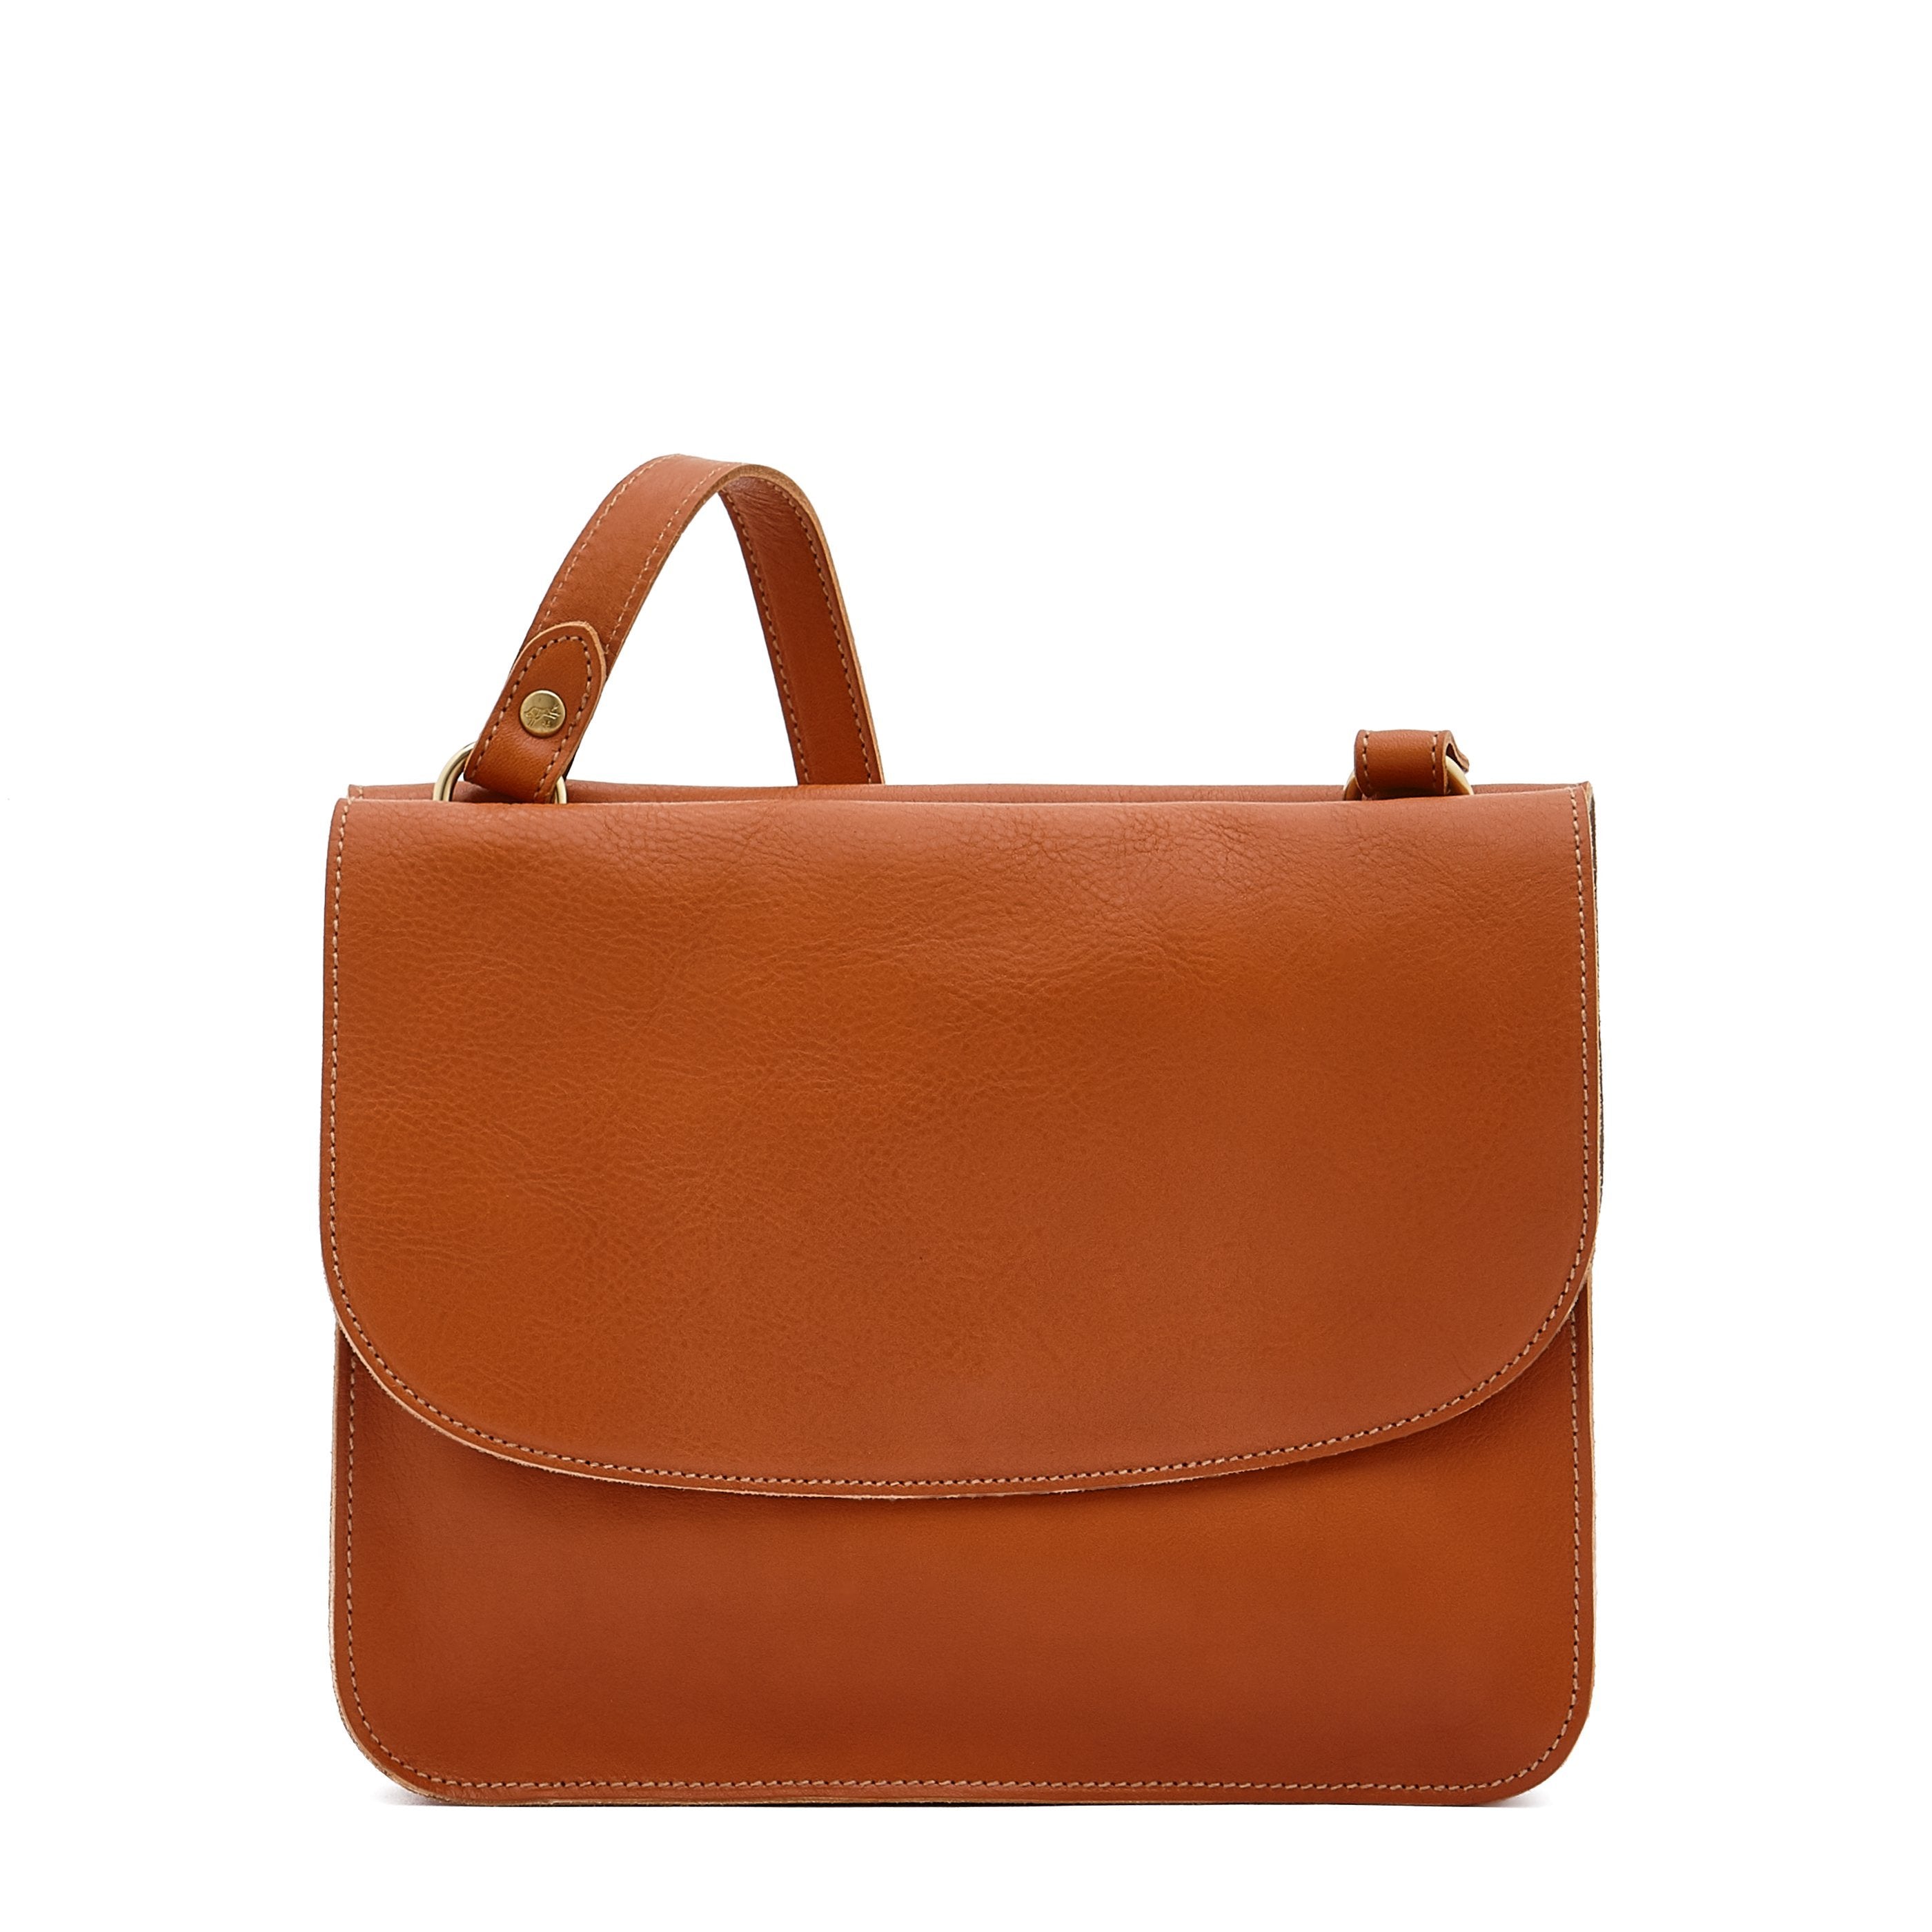 Salina | Women's crossbody bag in leather color caramel